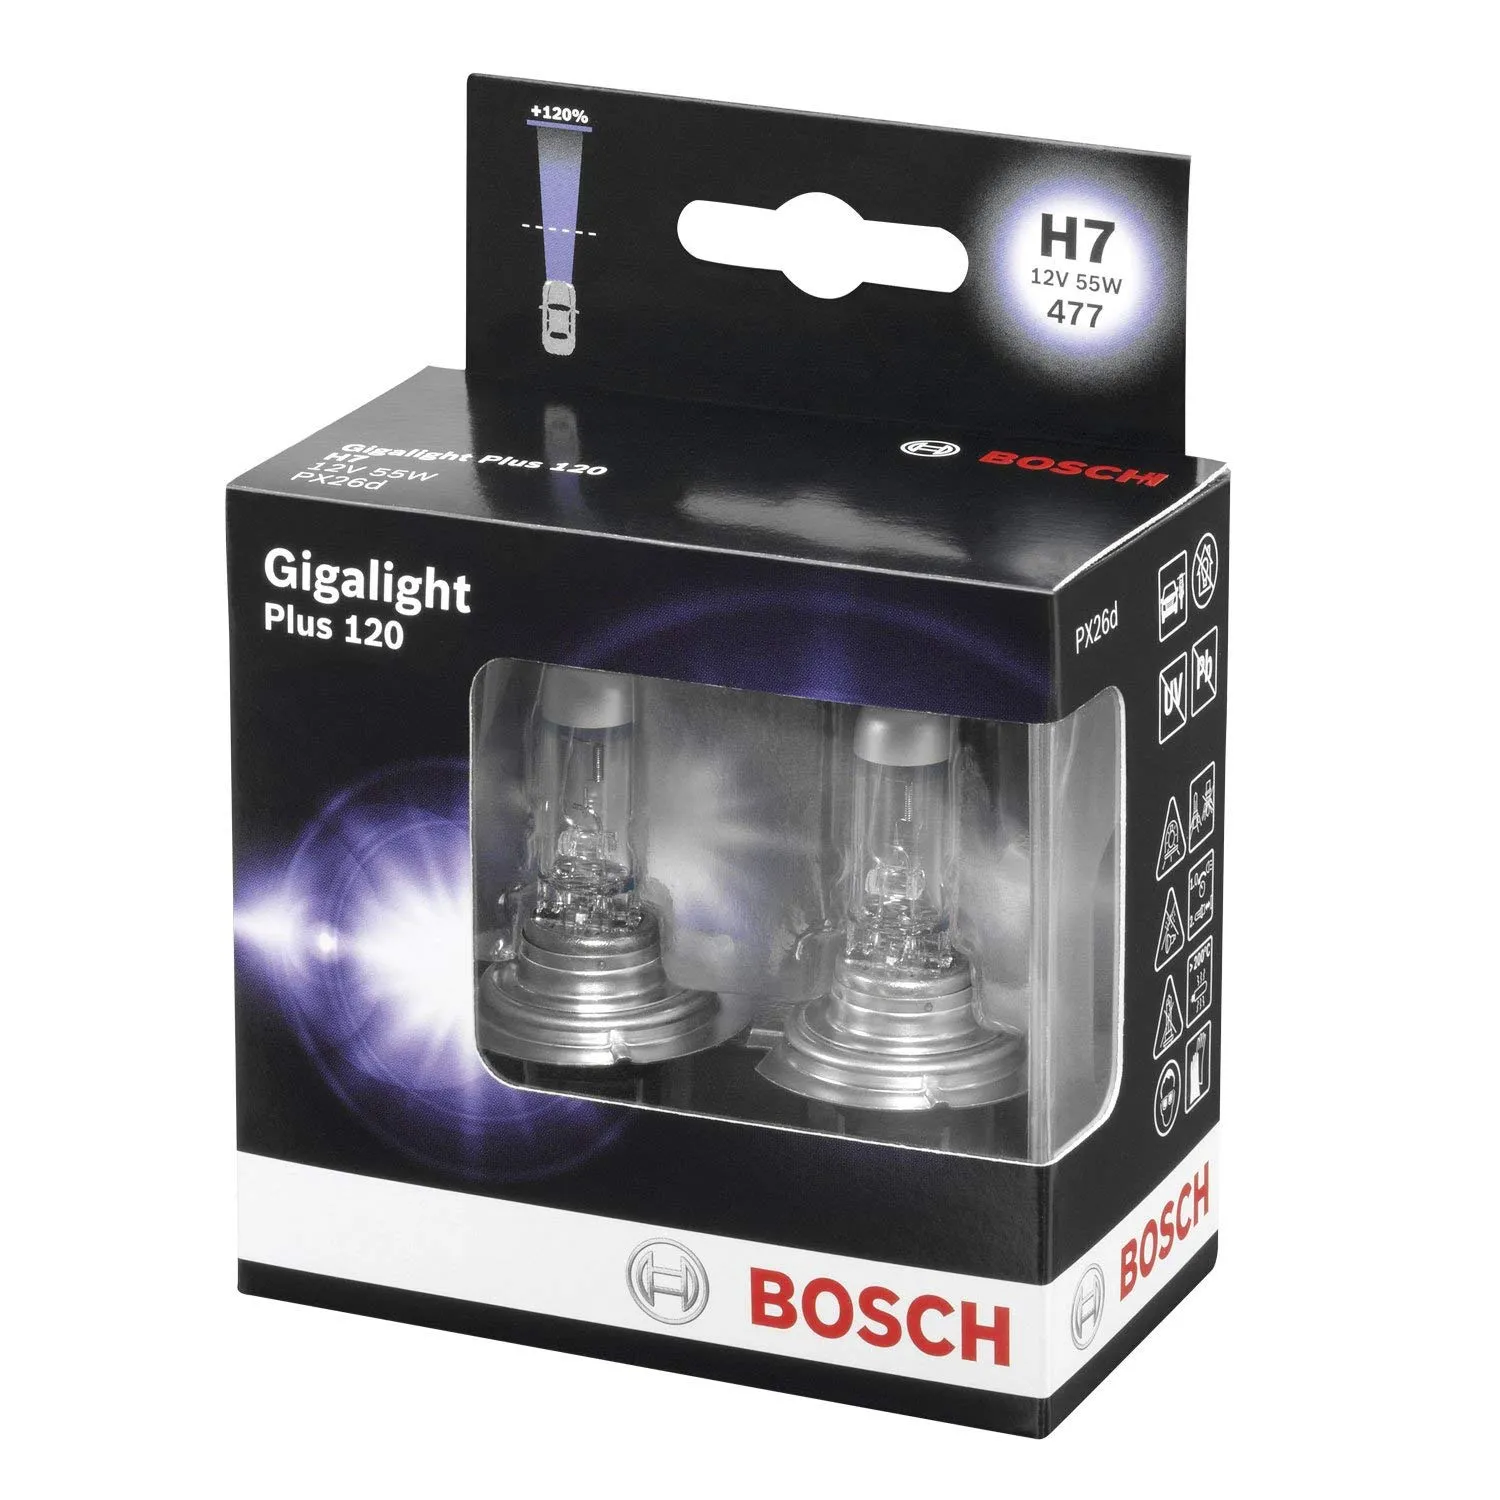 Bosch Gigalight Plus 120% Halogen